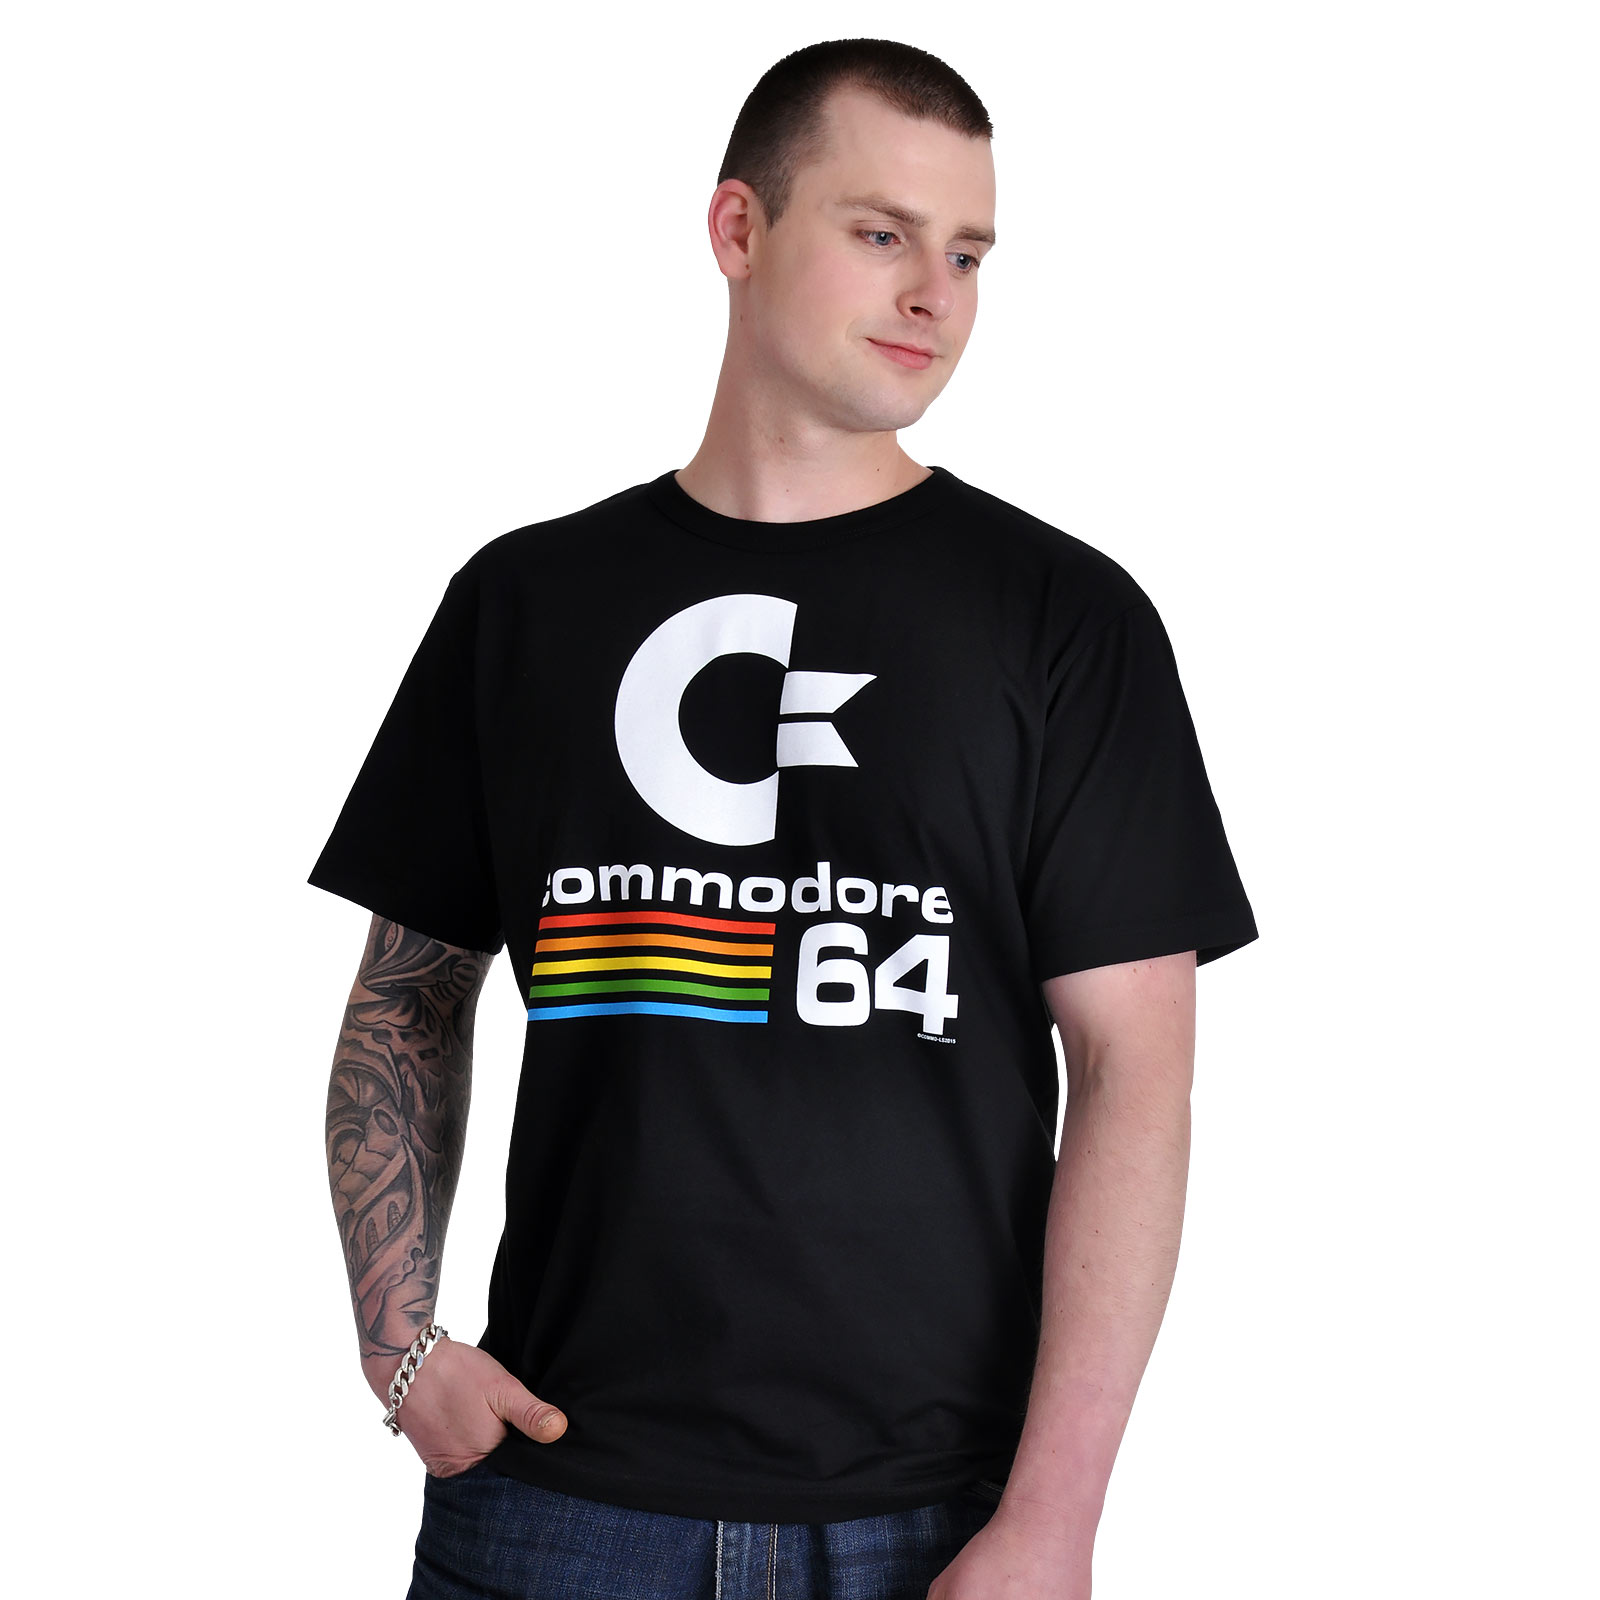 Commodore 64 - Logo T-Shirt black